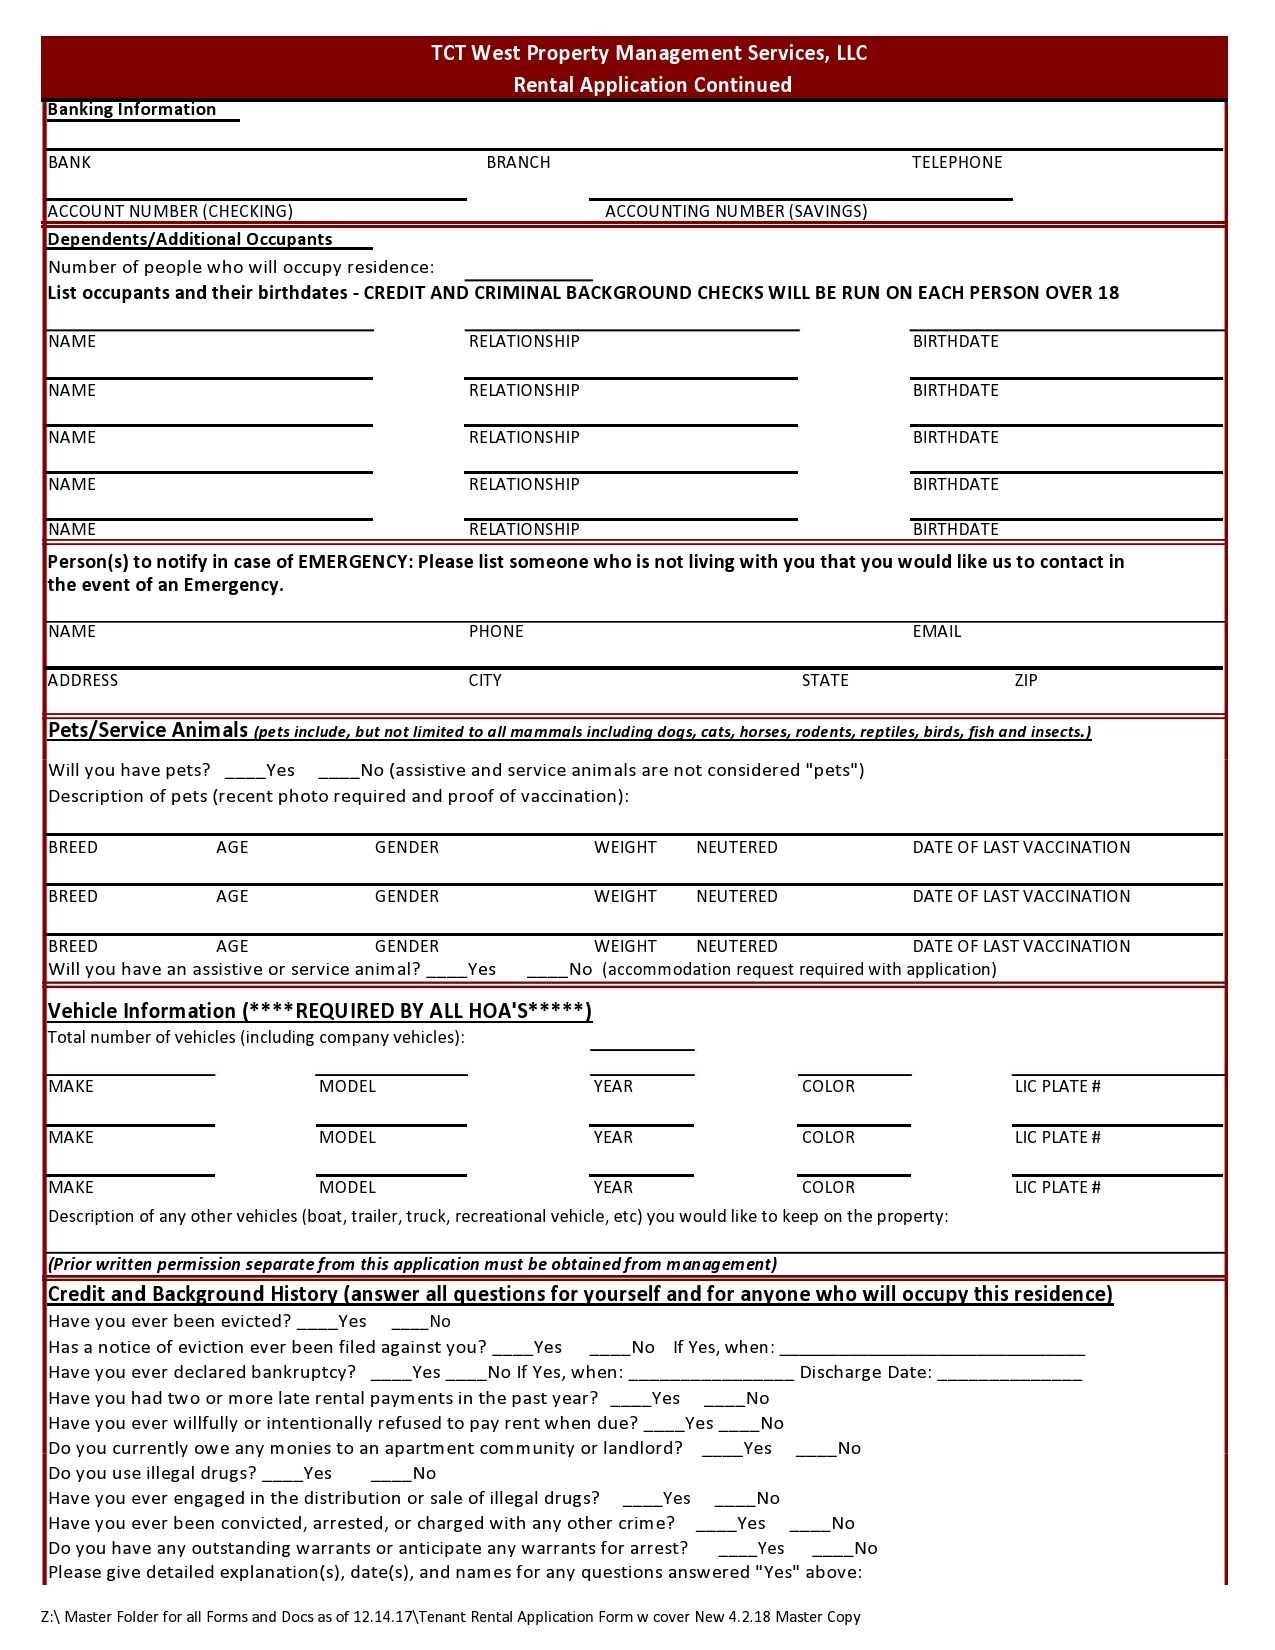 Free rental application form 49